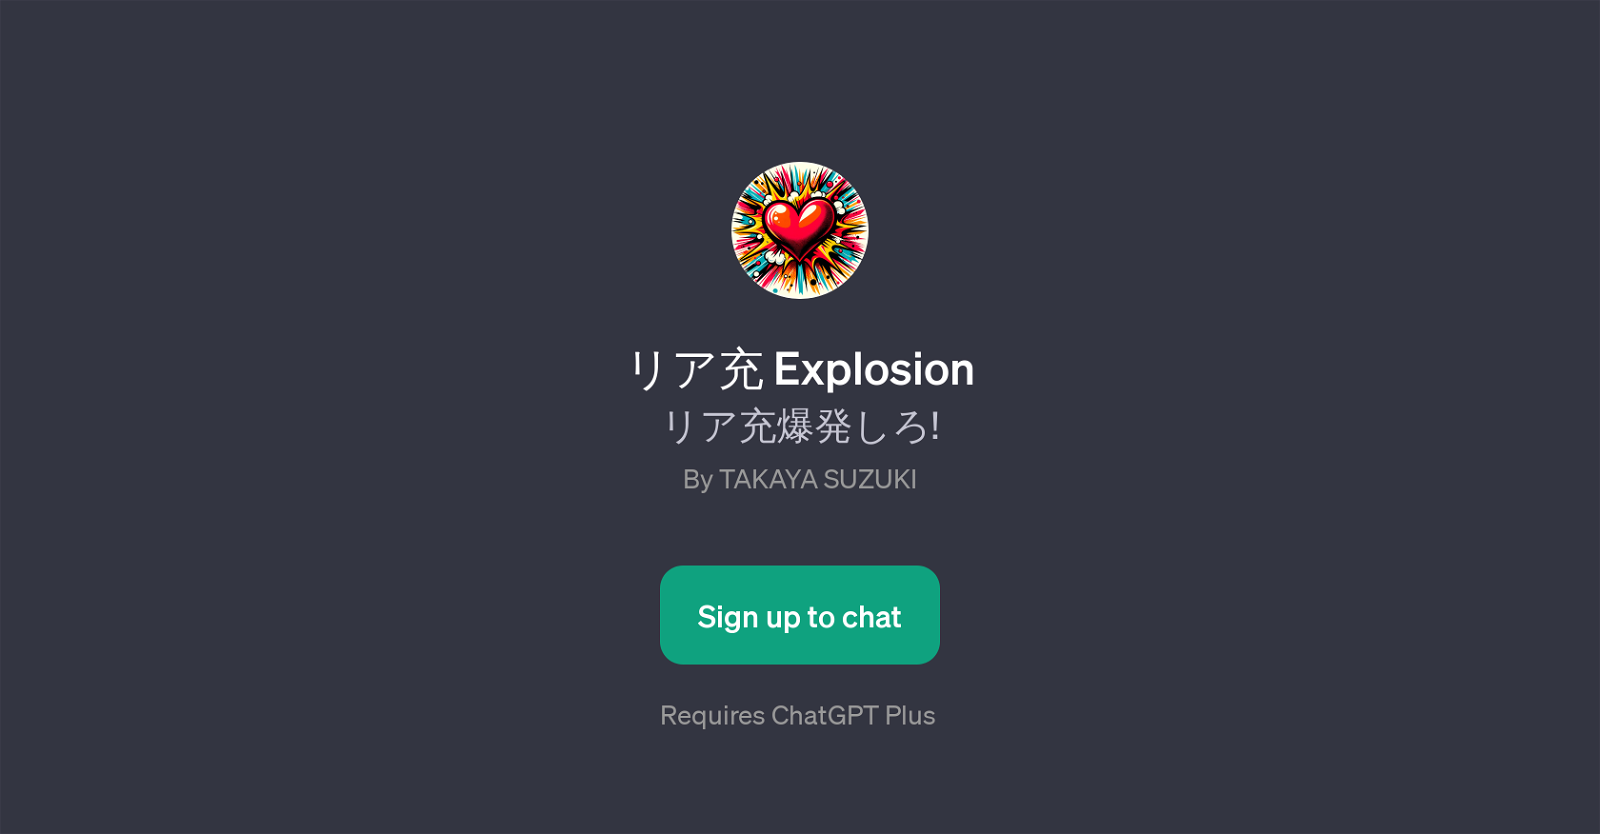 Explosion website